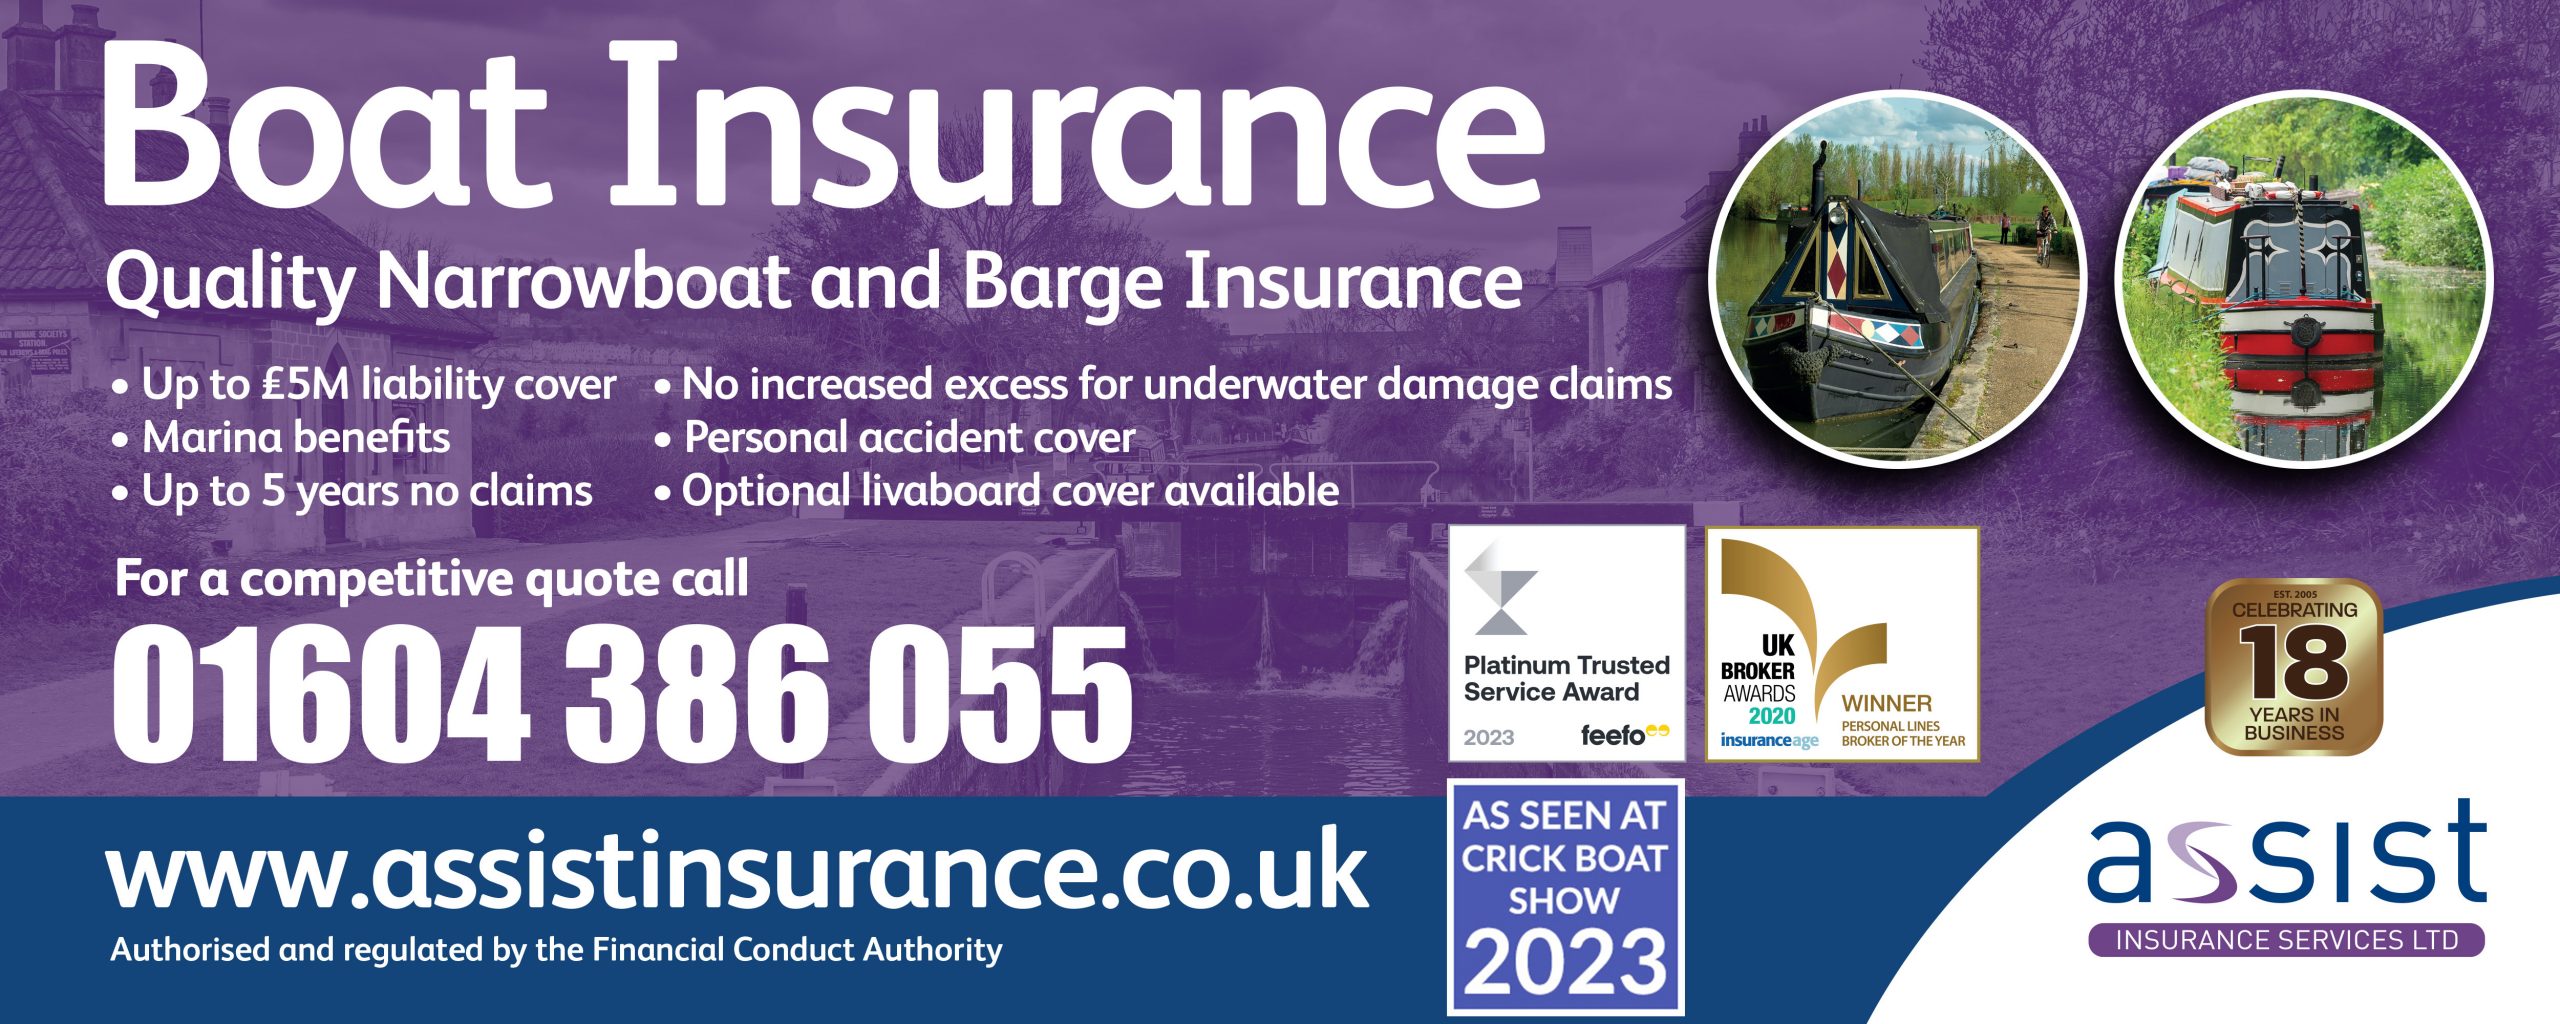 assist boat insurance